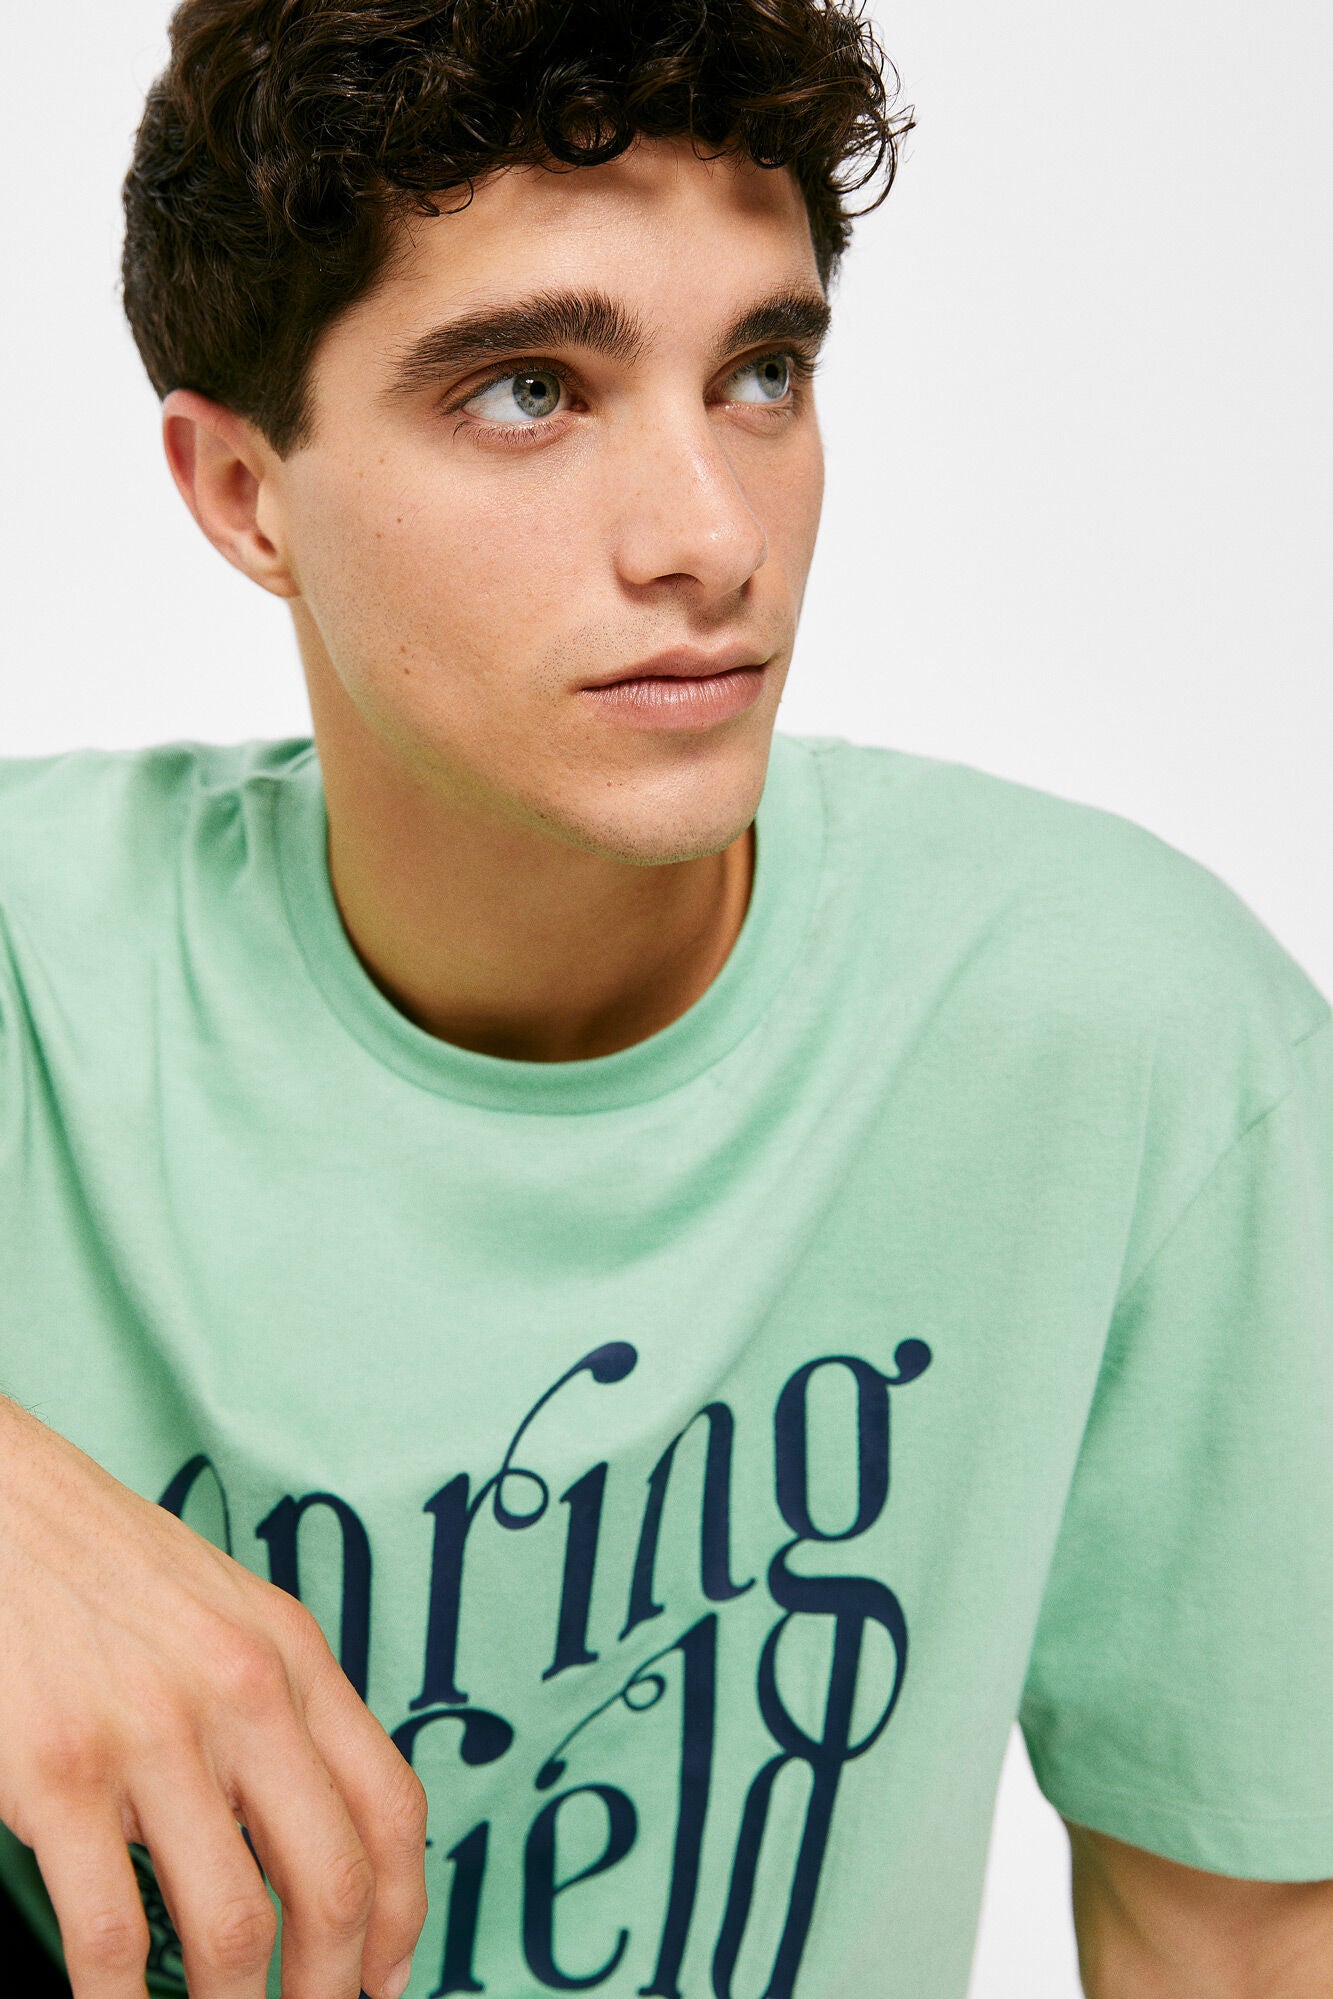 Springfield Printed T-Shirt (Regular Fit) - Green